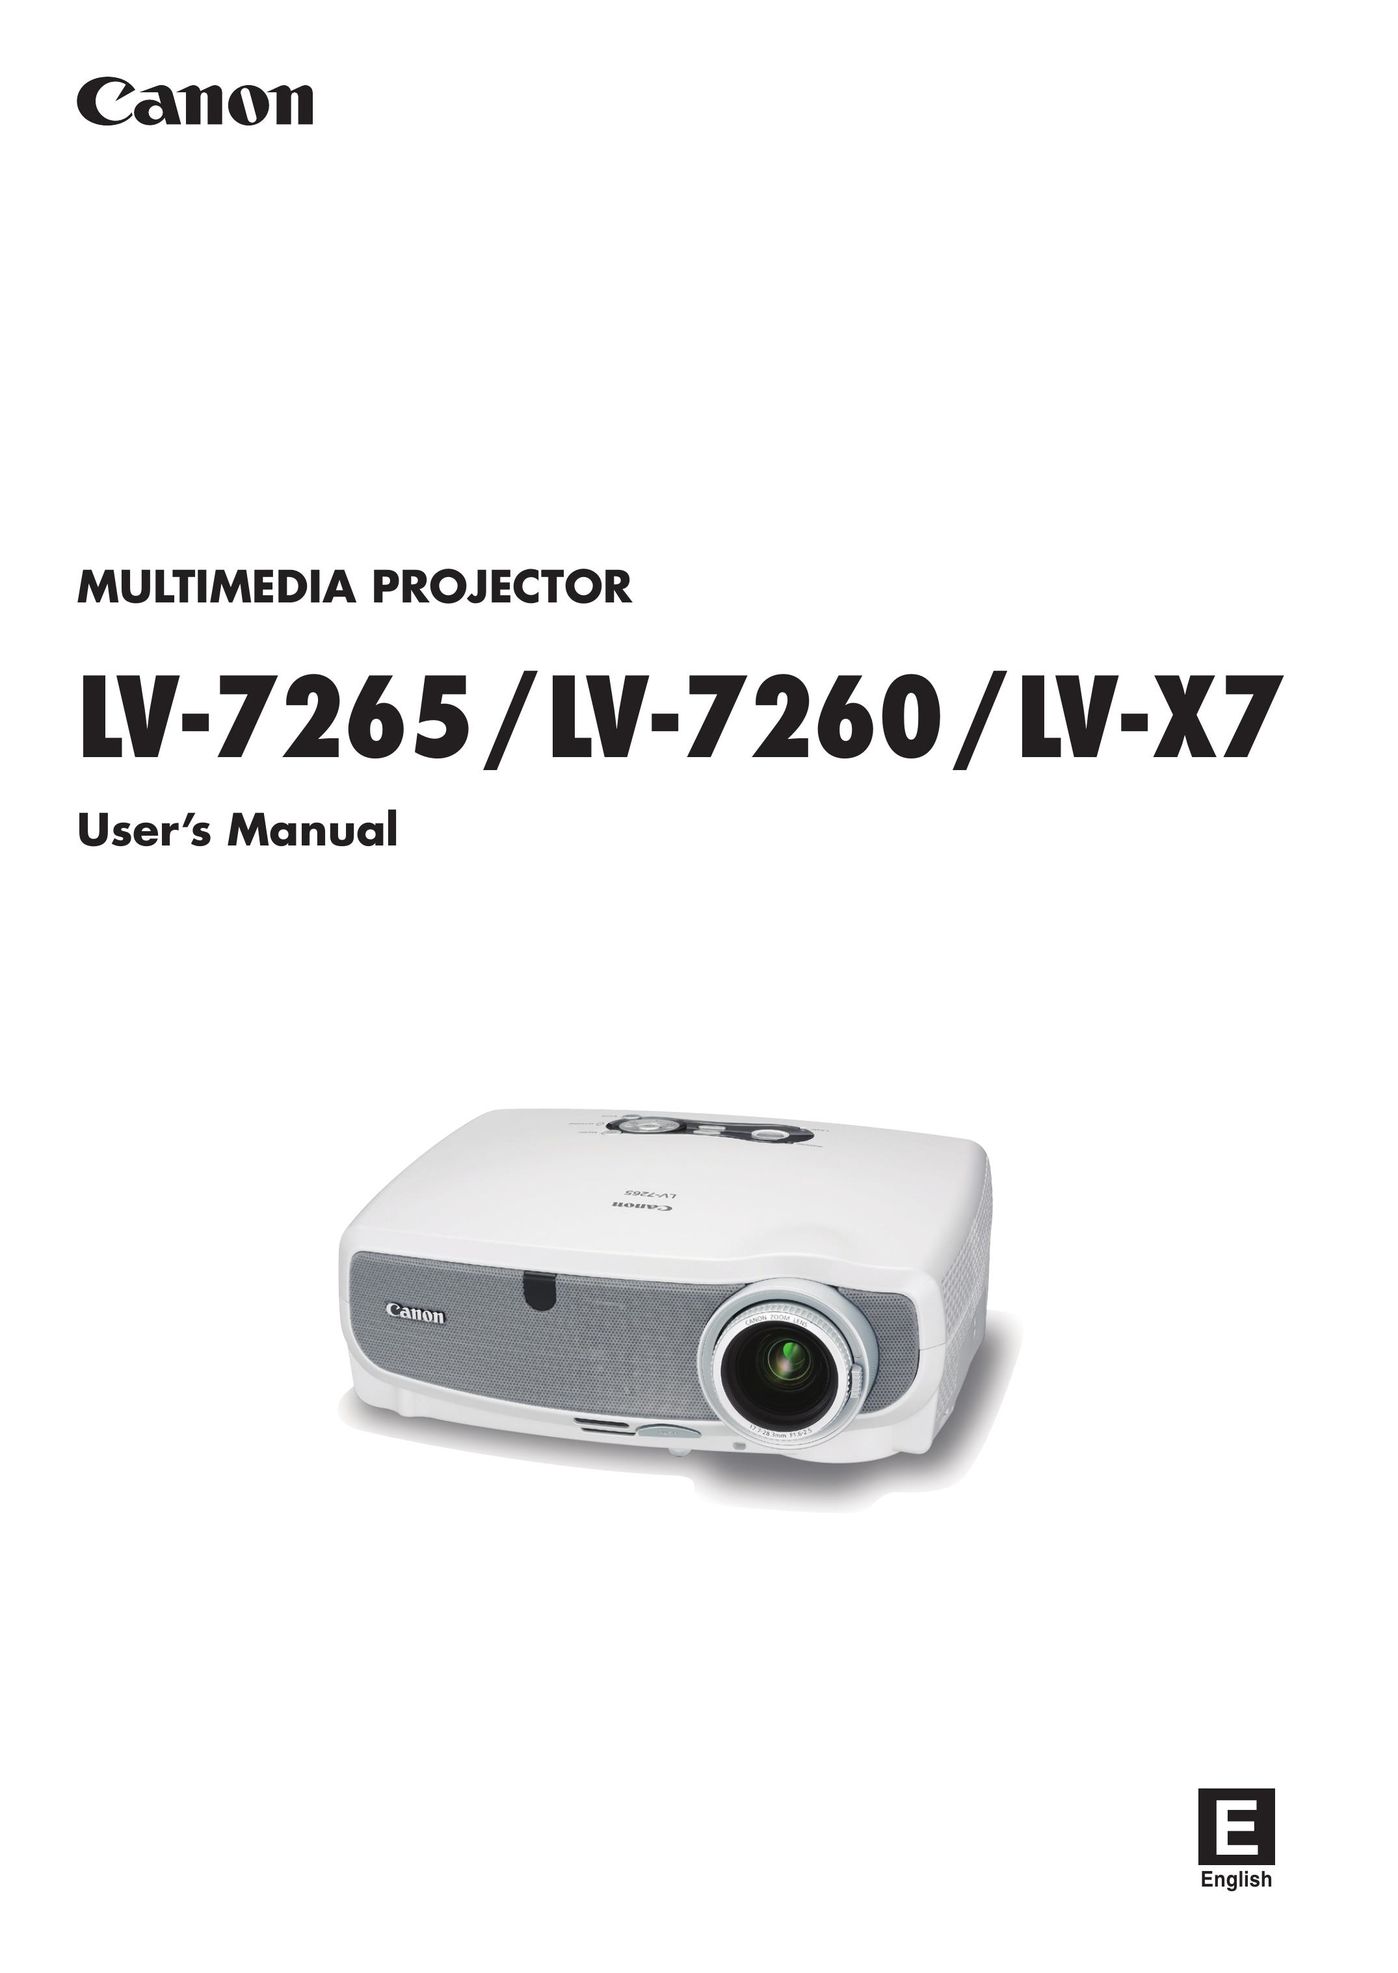 Canon LV-7260 Projector User Manual